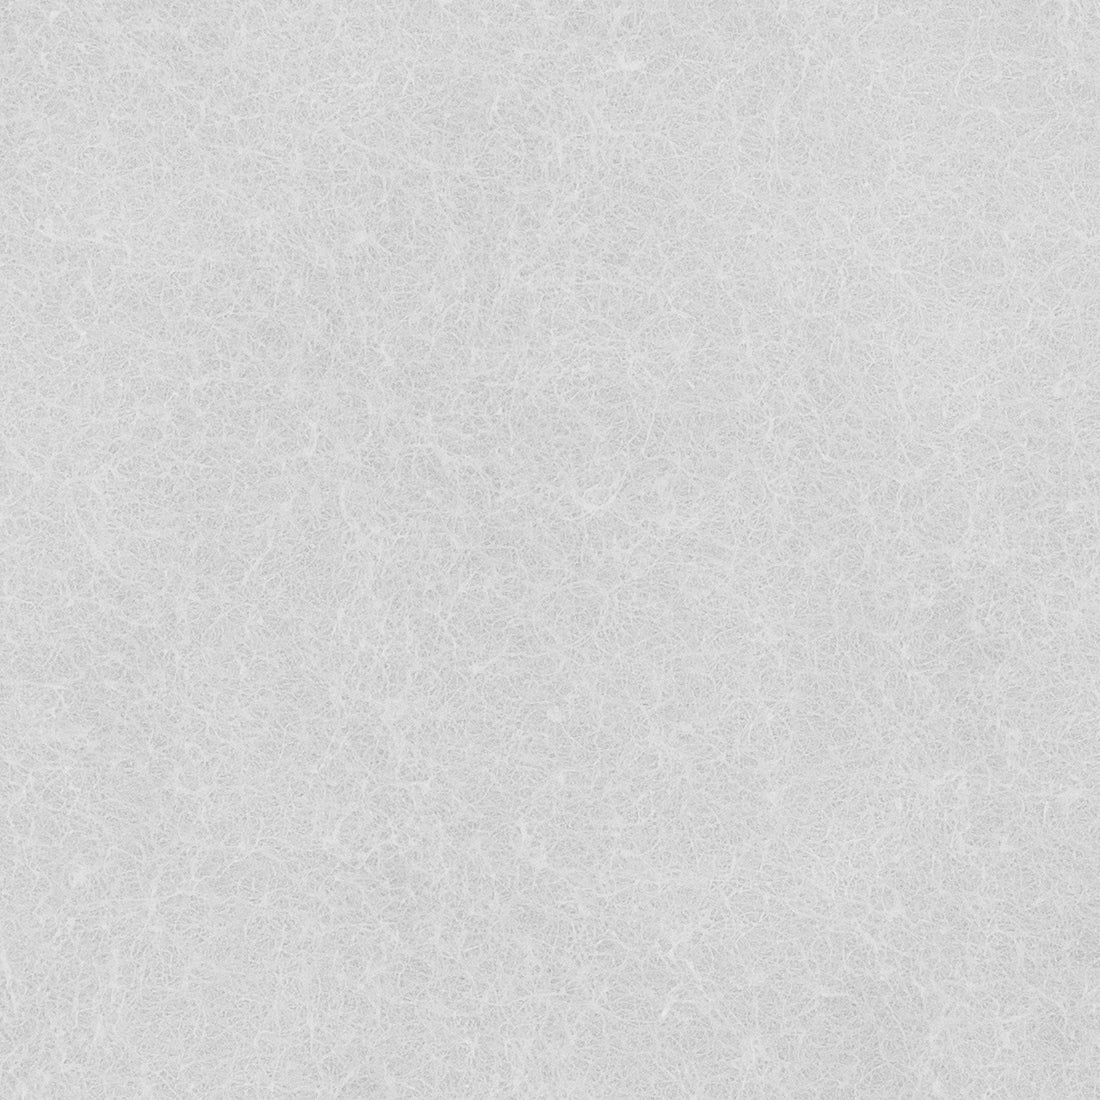 XERO White Scrub Pad Close Up View